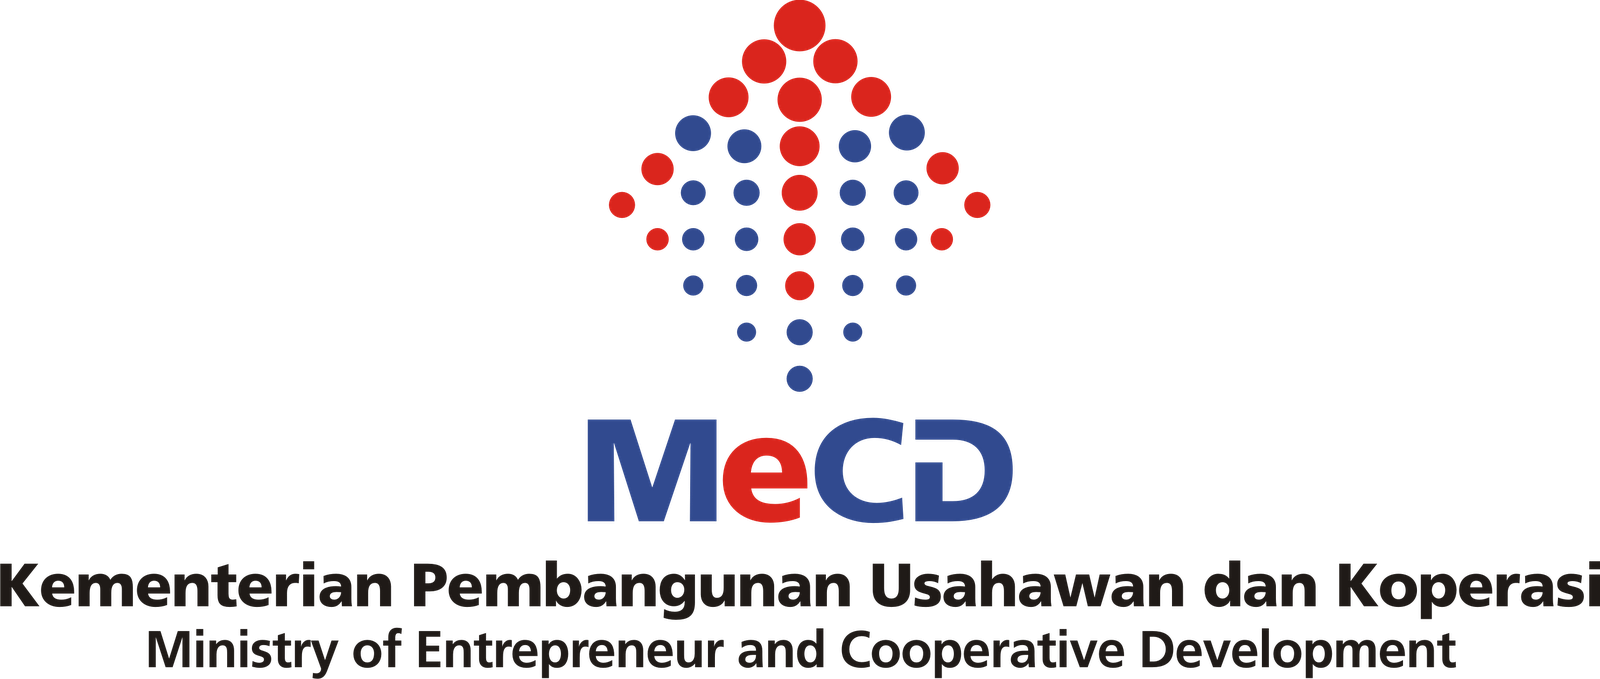 Logo Kementerian Pembangunan Usahawan Dan Koperasi Malaysia Ardi La Madi S Blog